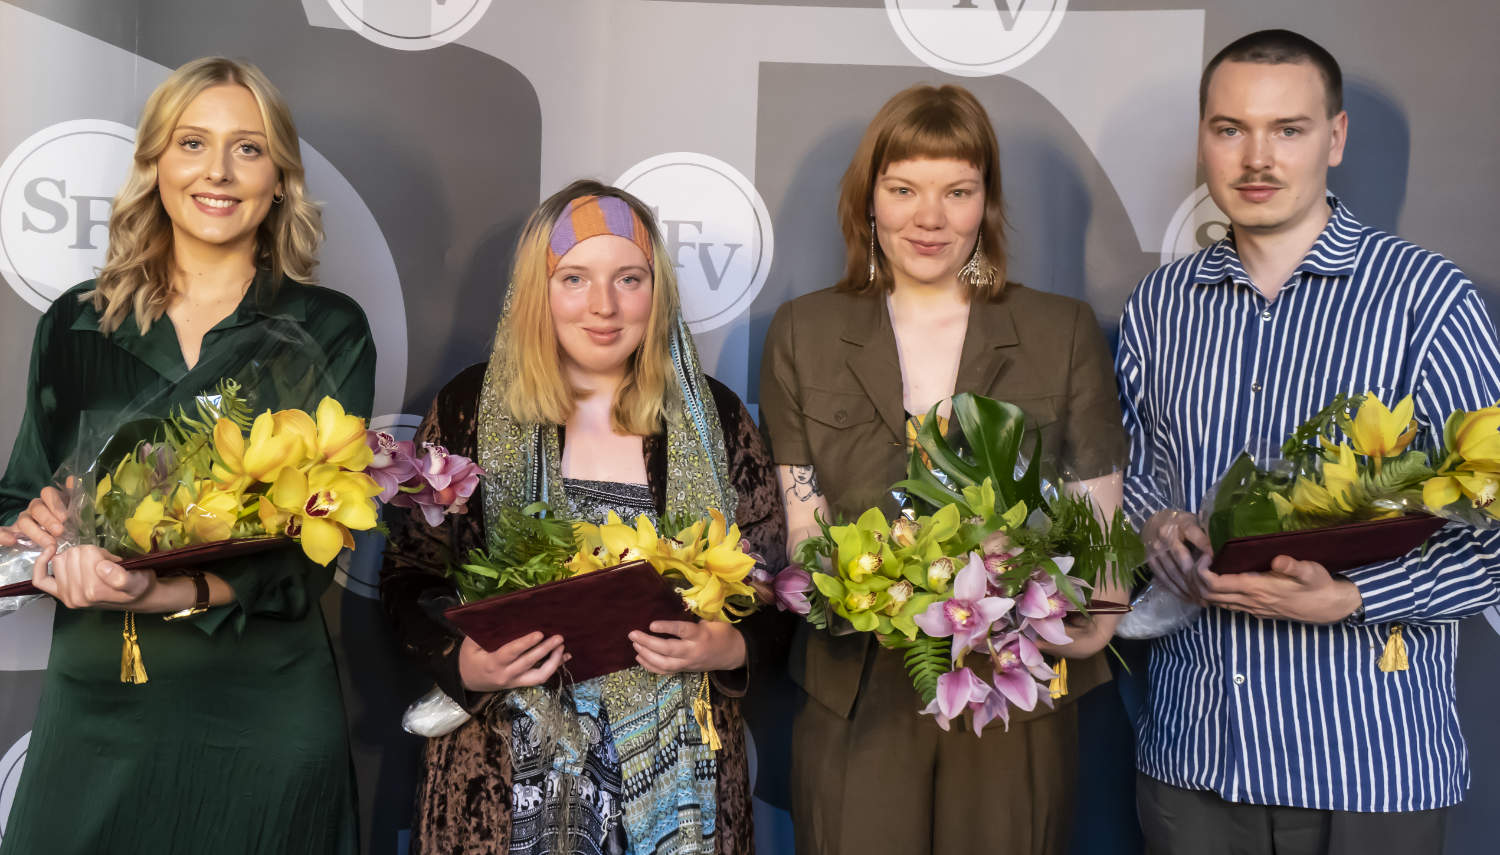 Vendla Fagerudd (III pris), Amanda Nylund (II pris), Alexandra Harald (I pris) och Daniel Wickström (hedersomn.). 